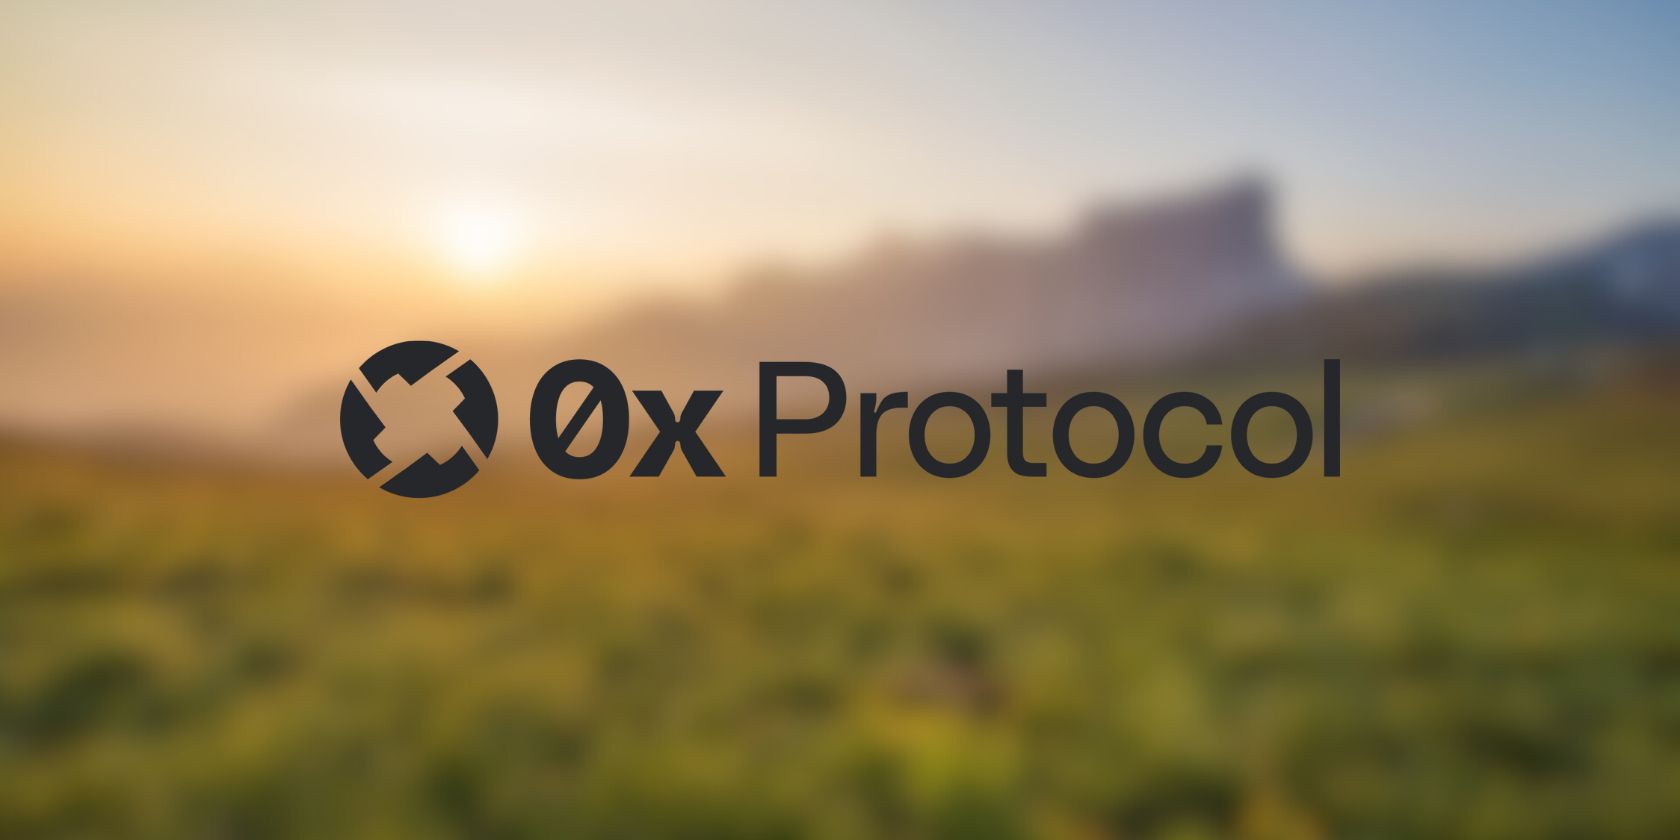 0x Protocol on a blurred landscape background